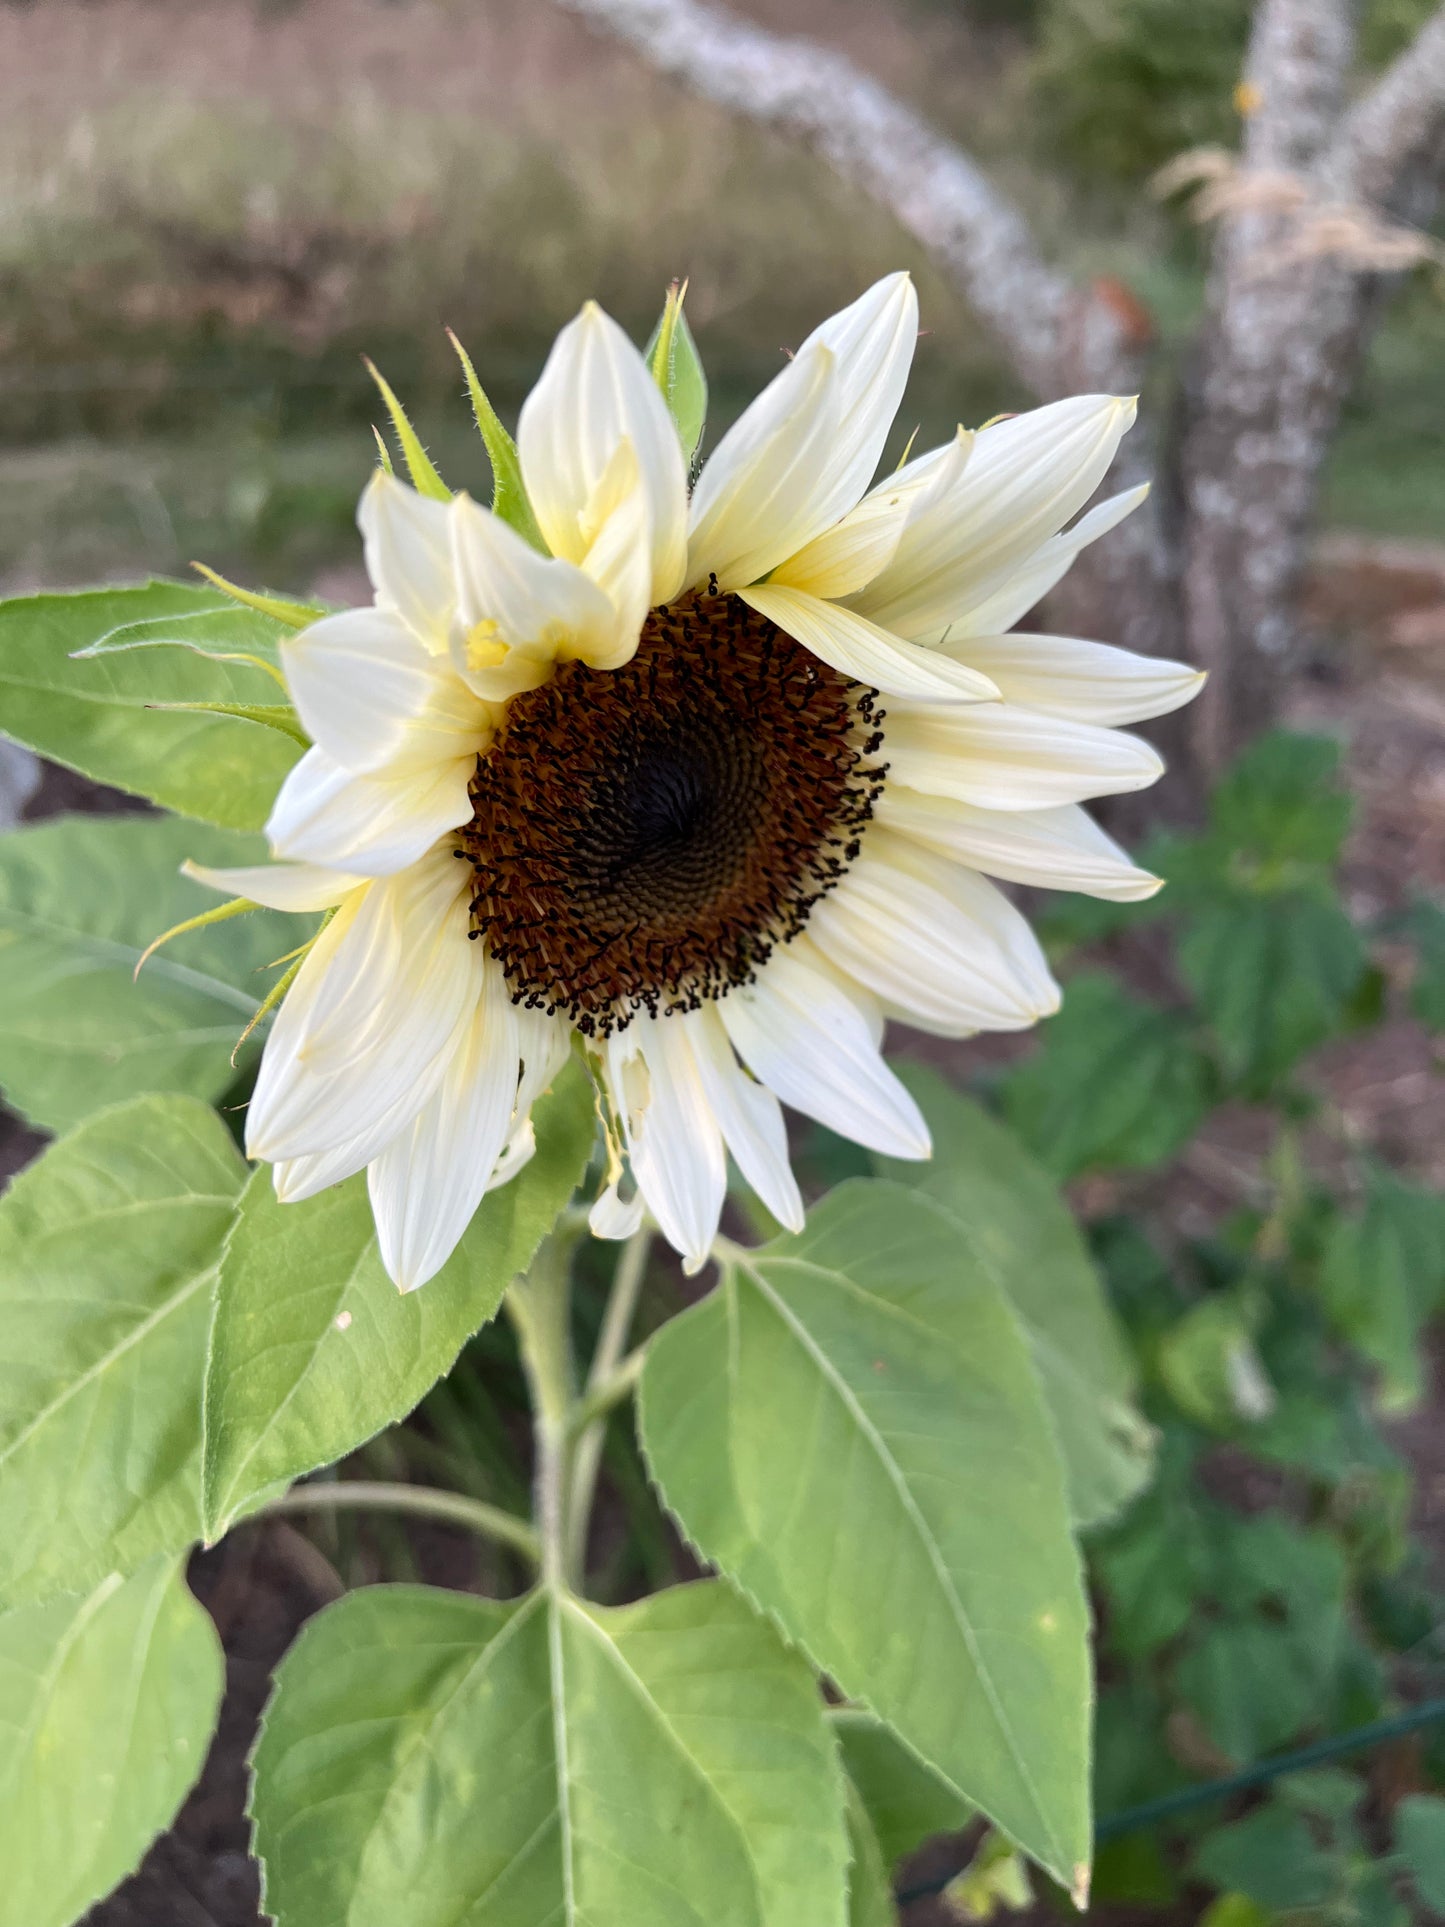 White Nite Sunflower Seeds, Pollenless Pale Sunflowers for Cut Flower Gardens